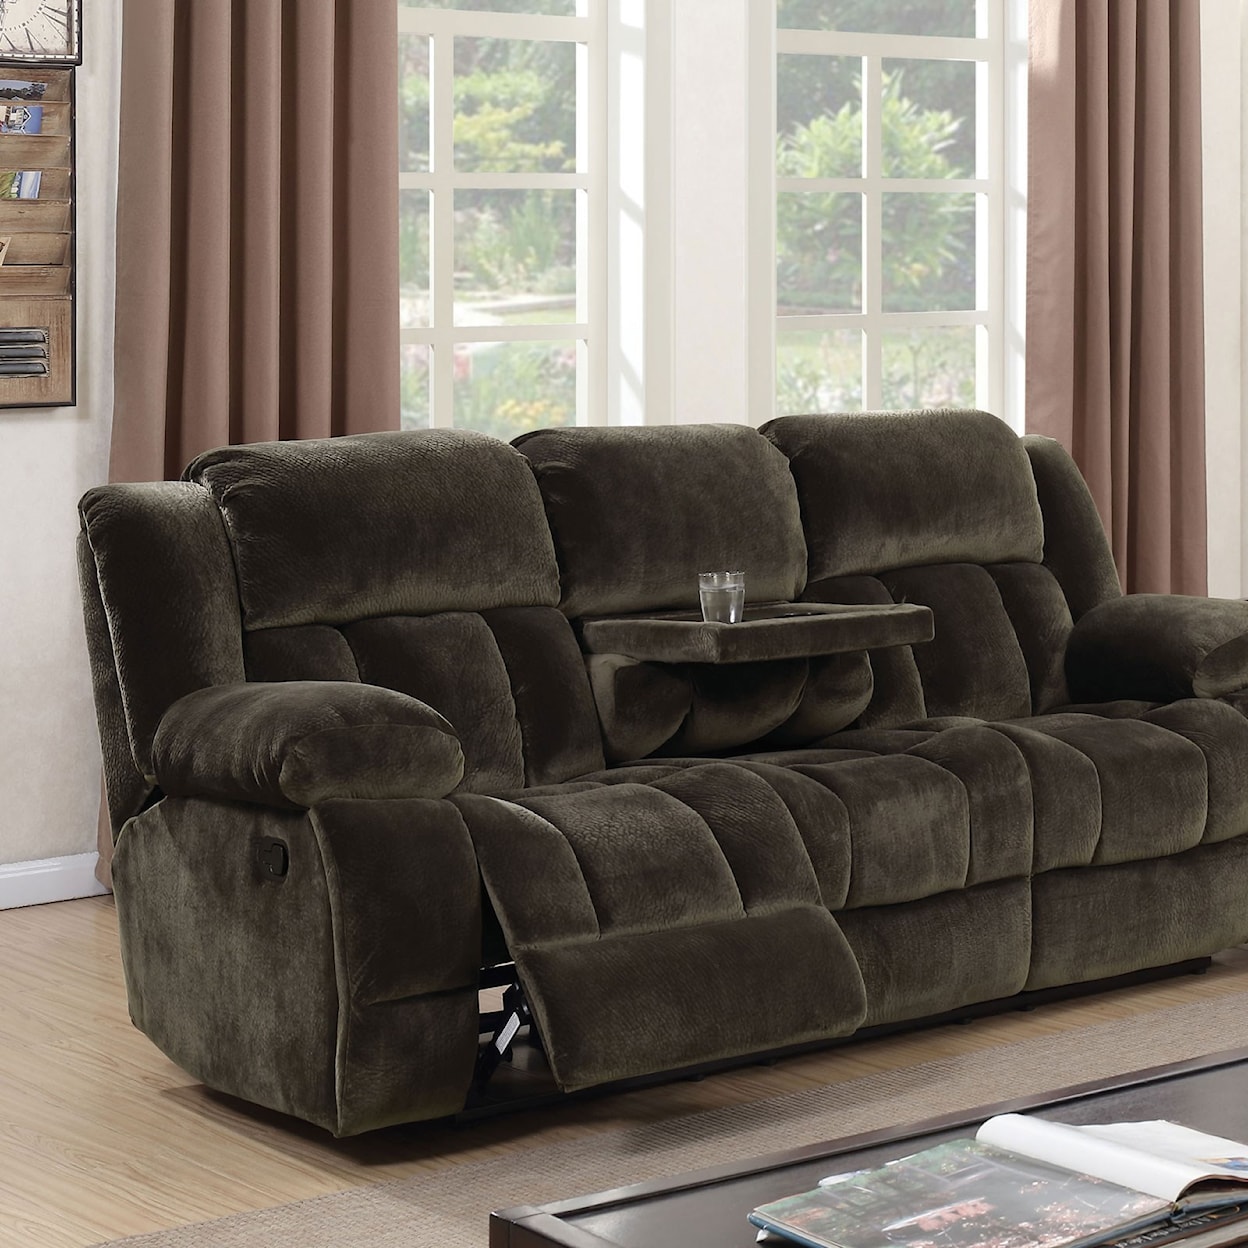 Furniture of America Sadhbh Reclining Sofa